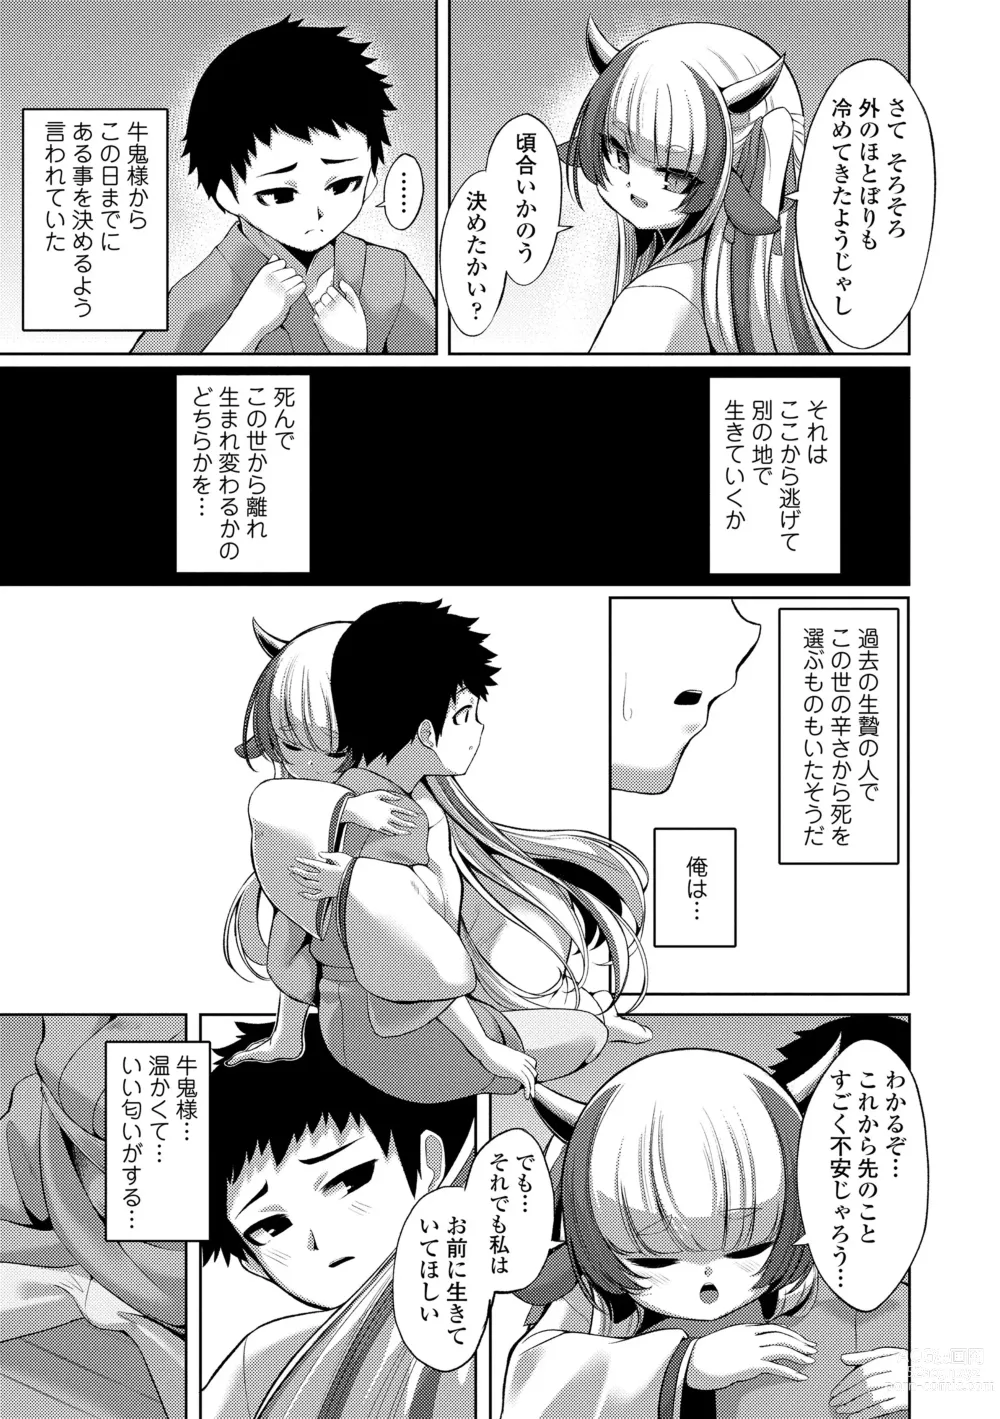 Page 9 of manga Hitoyo Hitoyo Ouse no Mamani